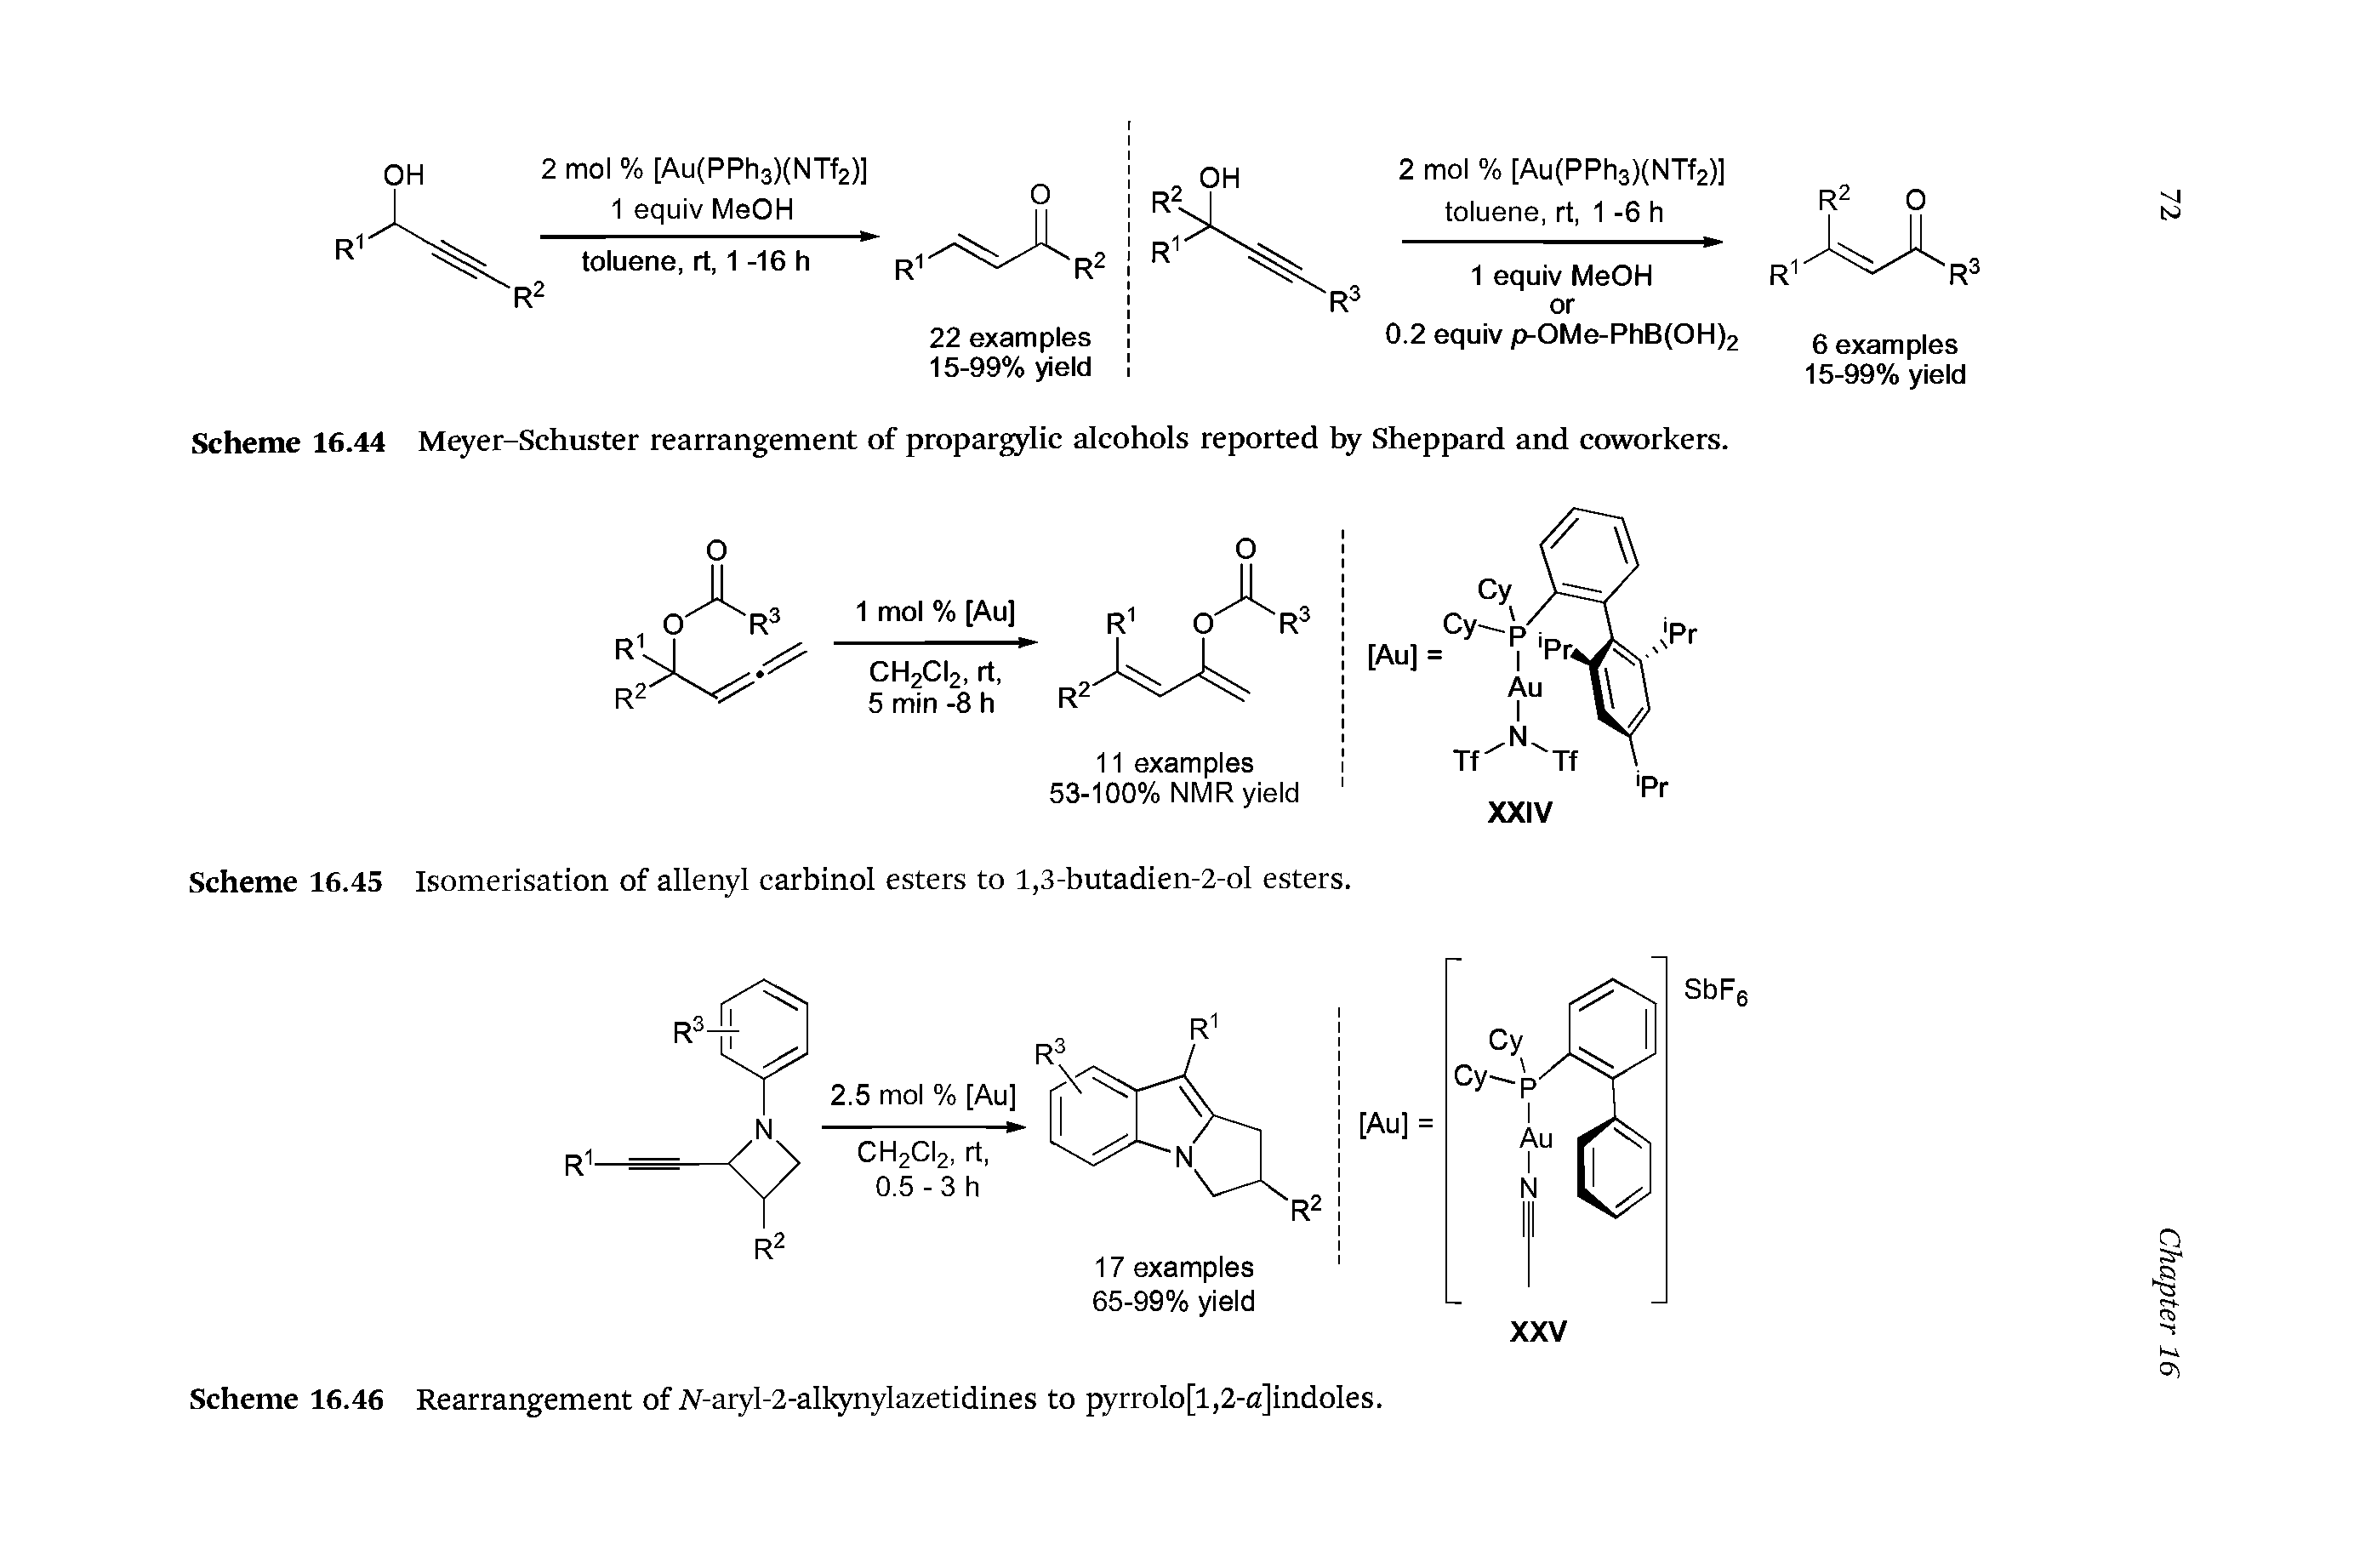 Scheme 16.45 Isomerisation of allenyl carbinol esters to l,3-butadien-2-ol esters.